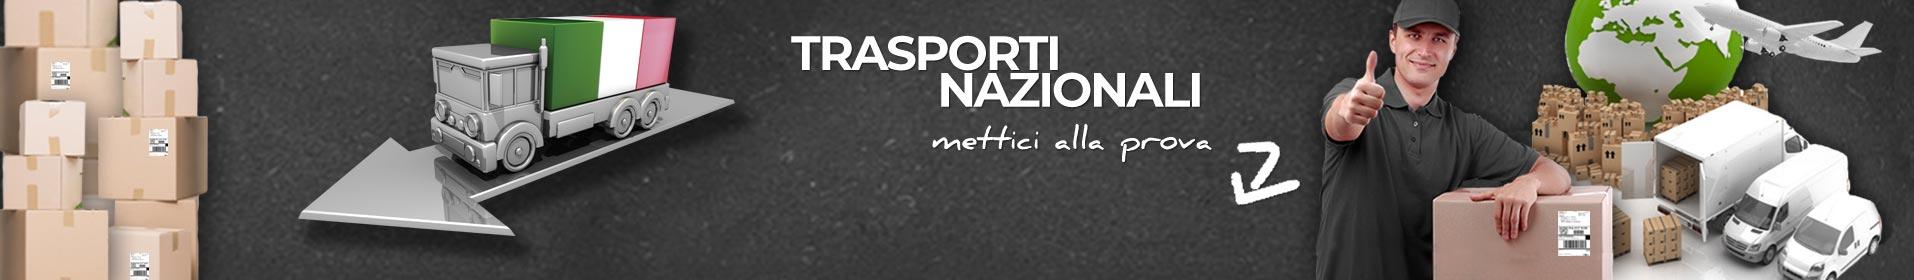 banner trasporti nazionali